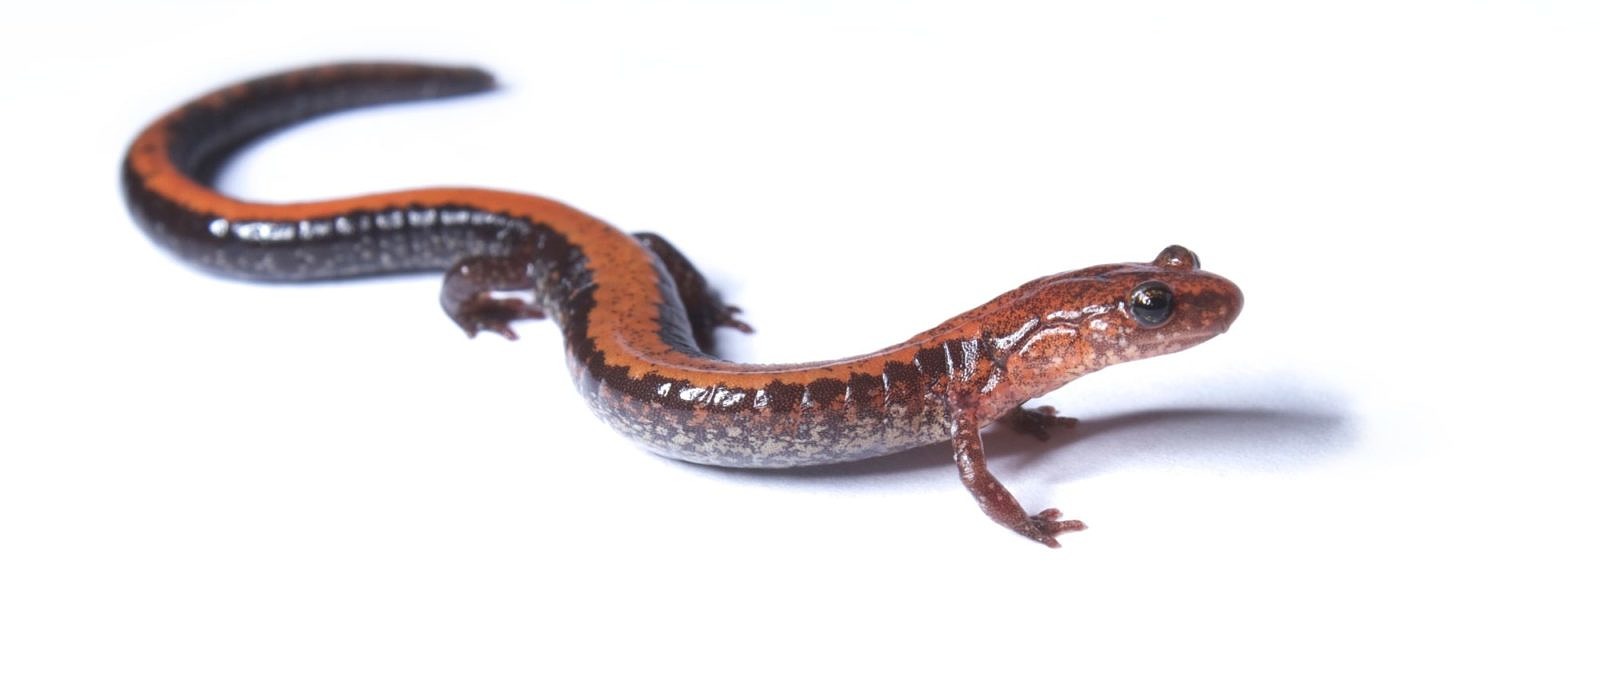 A redbacked salamander strokes a pose. (photo © Brian Gratwicke)